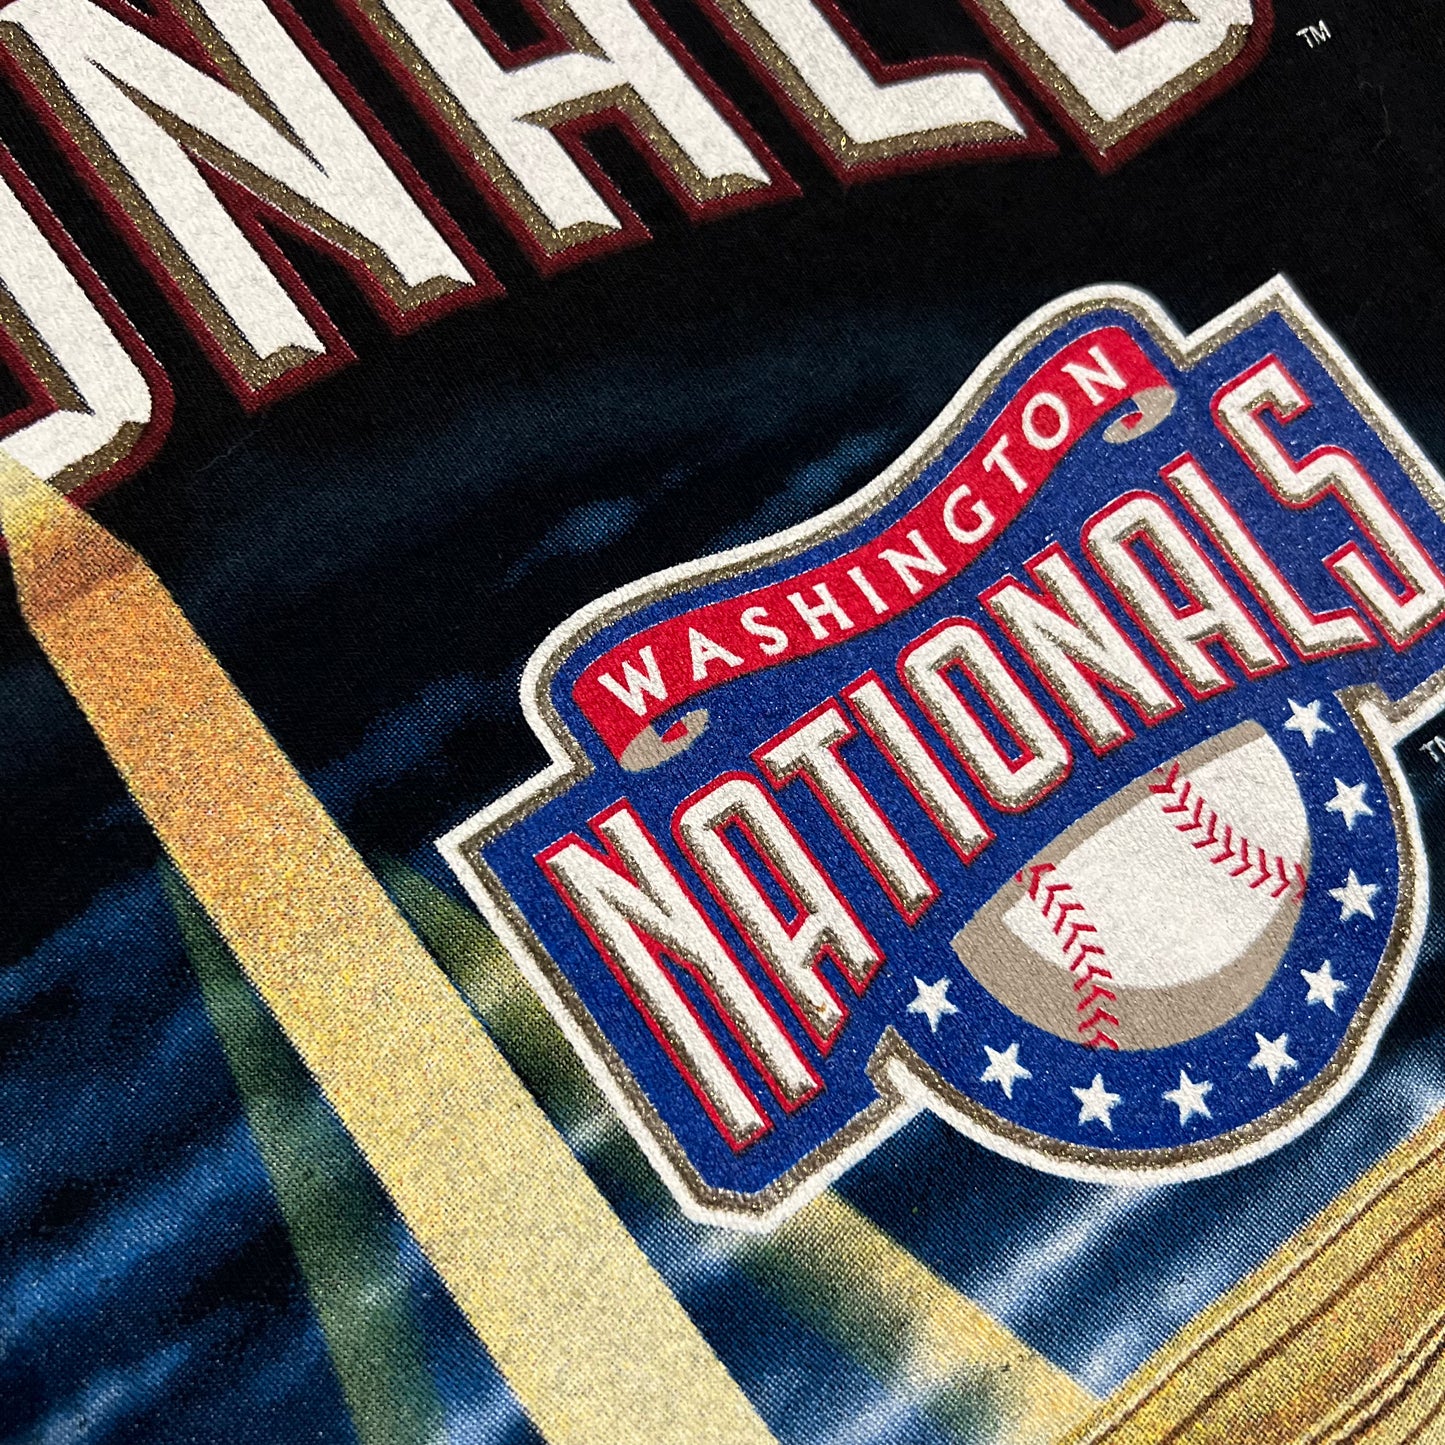 2004 Washington Nationals Baseball is Back in DC Shirt - XL